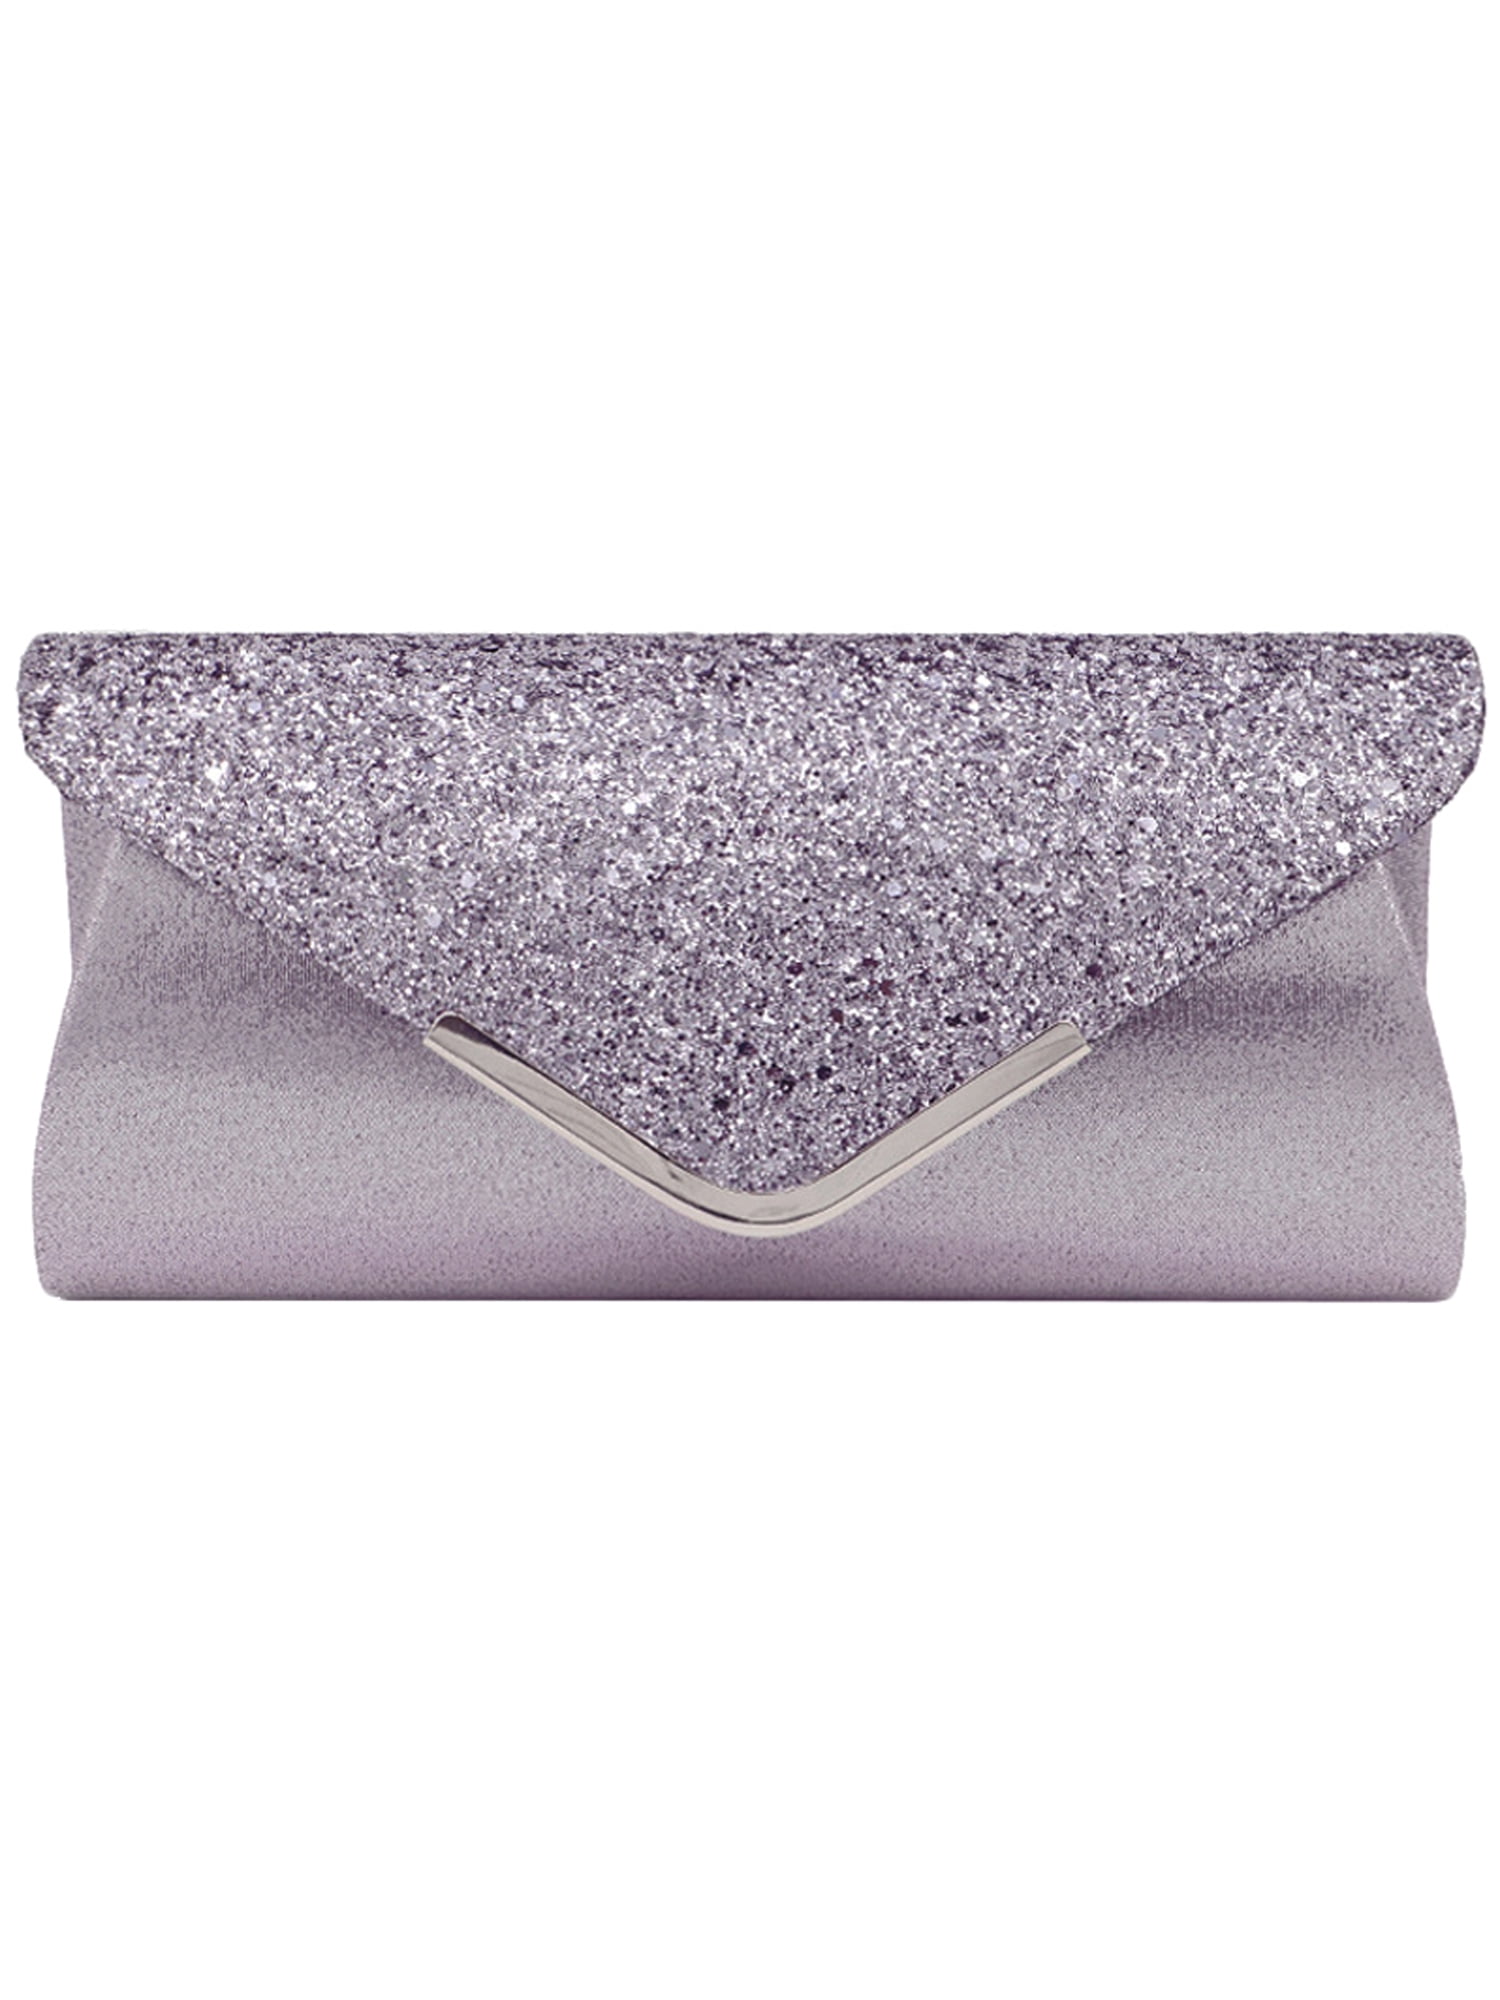 Handbag Evening Bag Clutch Party Prom Wedding Shiny Glitter Sparkly Box Dust